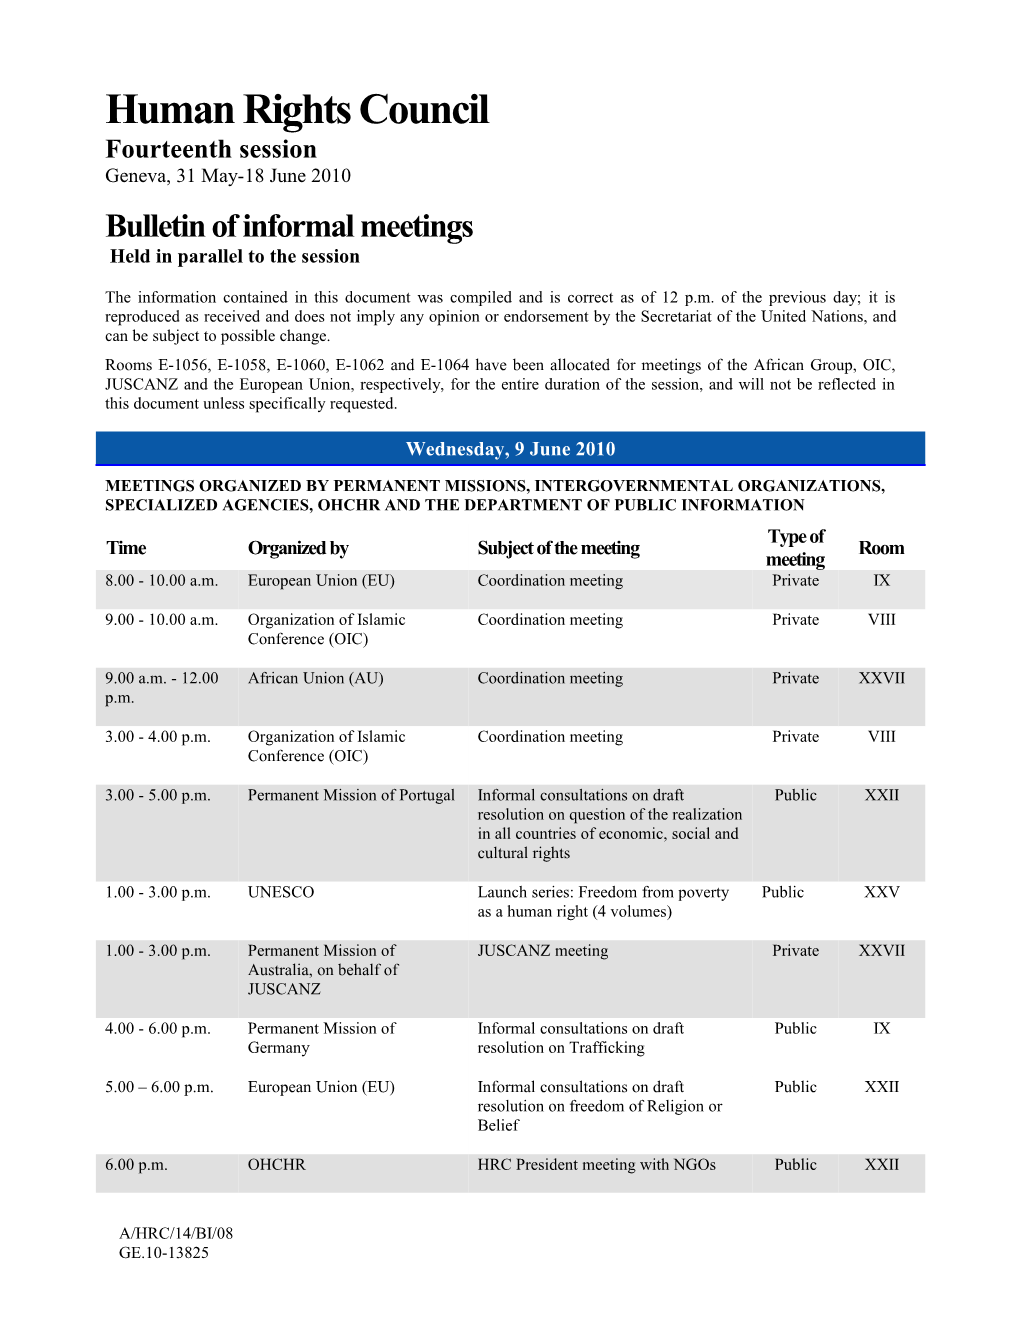 Bulletin of Informal Meetings